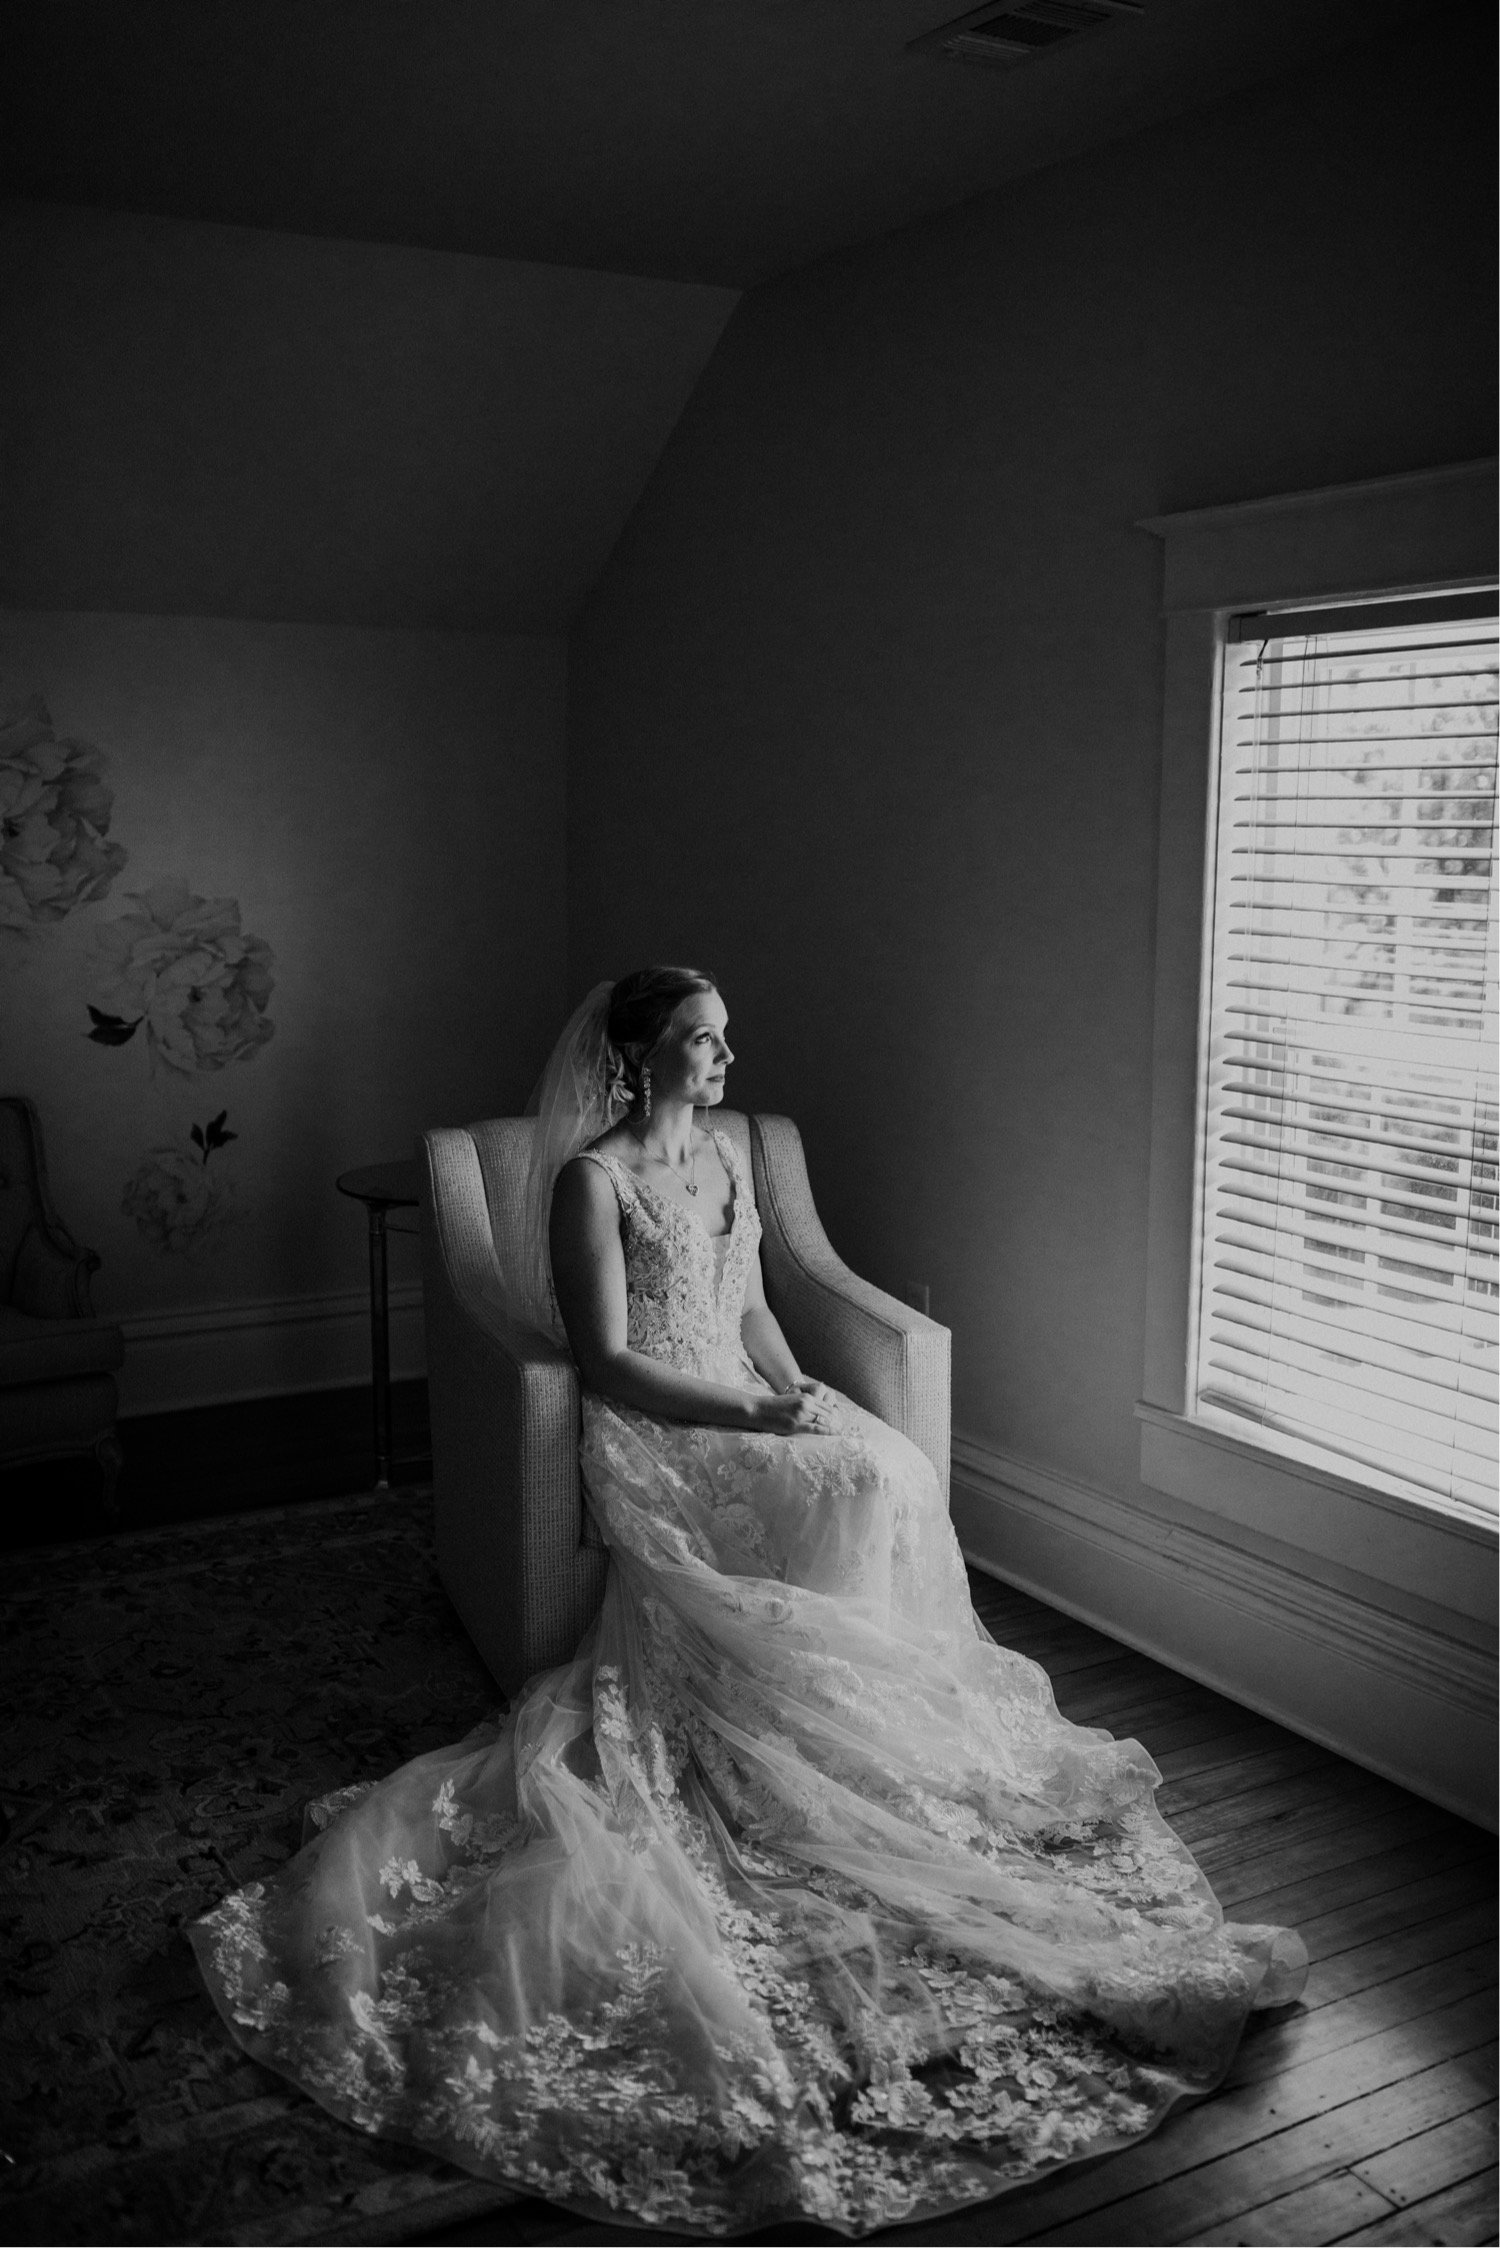 020_Alyssa&Vince-197-2_Hawthorne-house-kansas-city-wedding-photography-missouri-parkville-kelsey-diane-spring-bride-groom.jpg